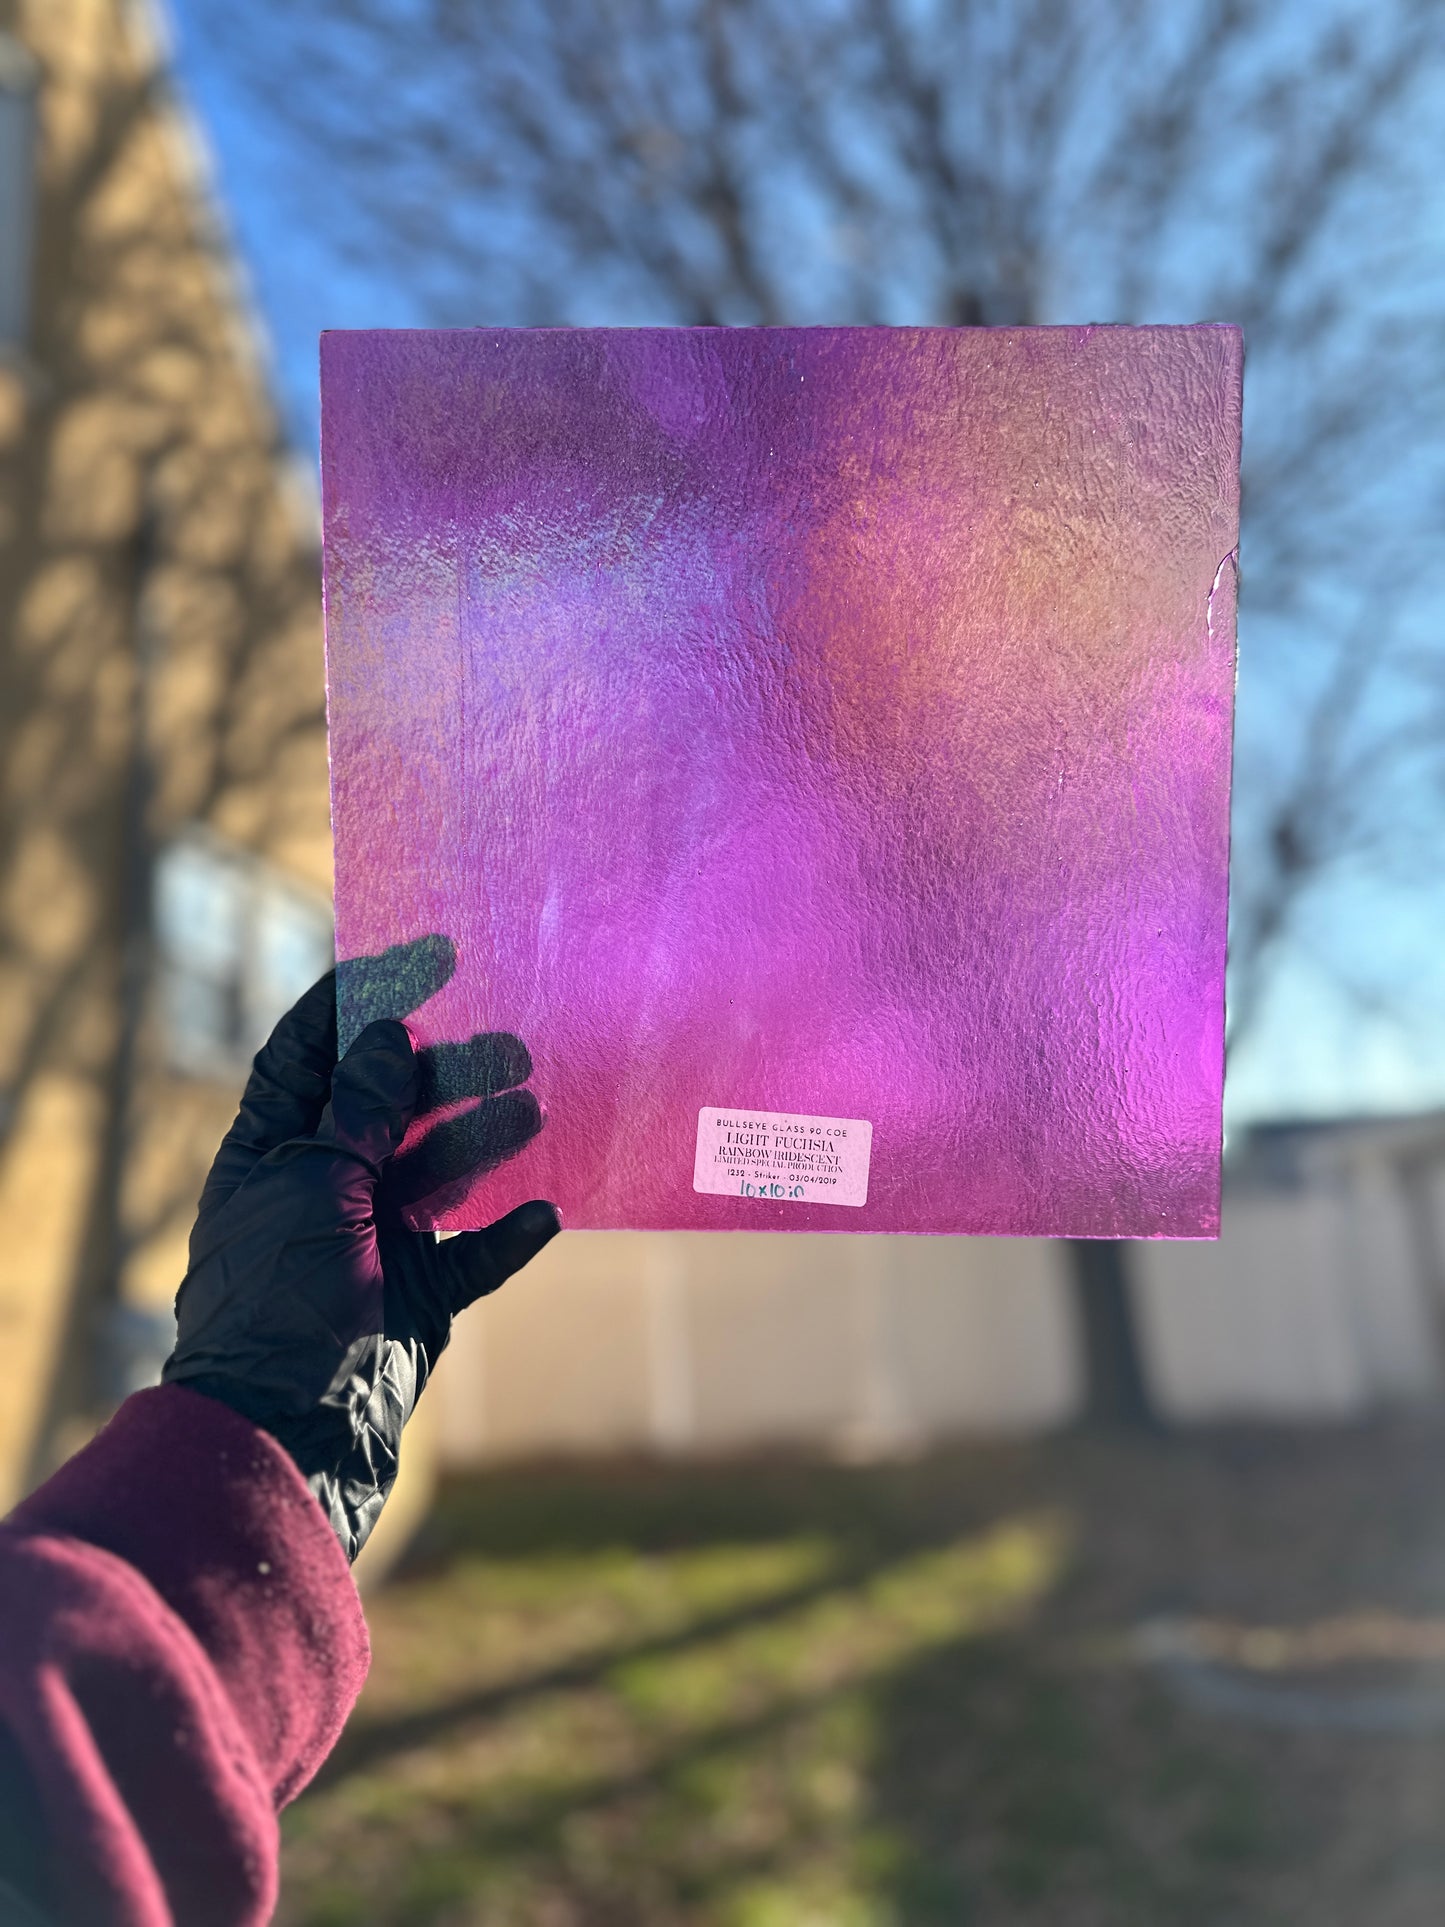 Bullseye Glass - Light Fuchsia Pink Transparent Rainbow Iridescent- 12 –  The Sprouted Plate